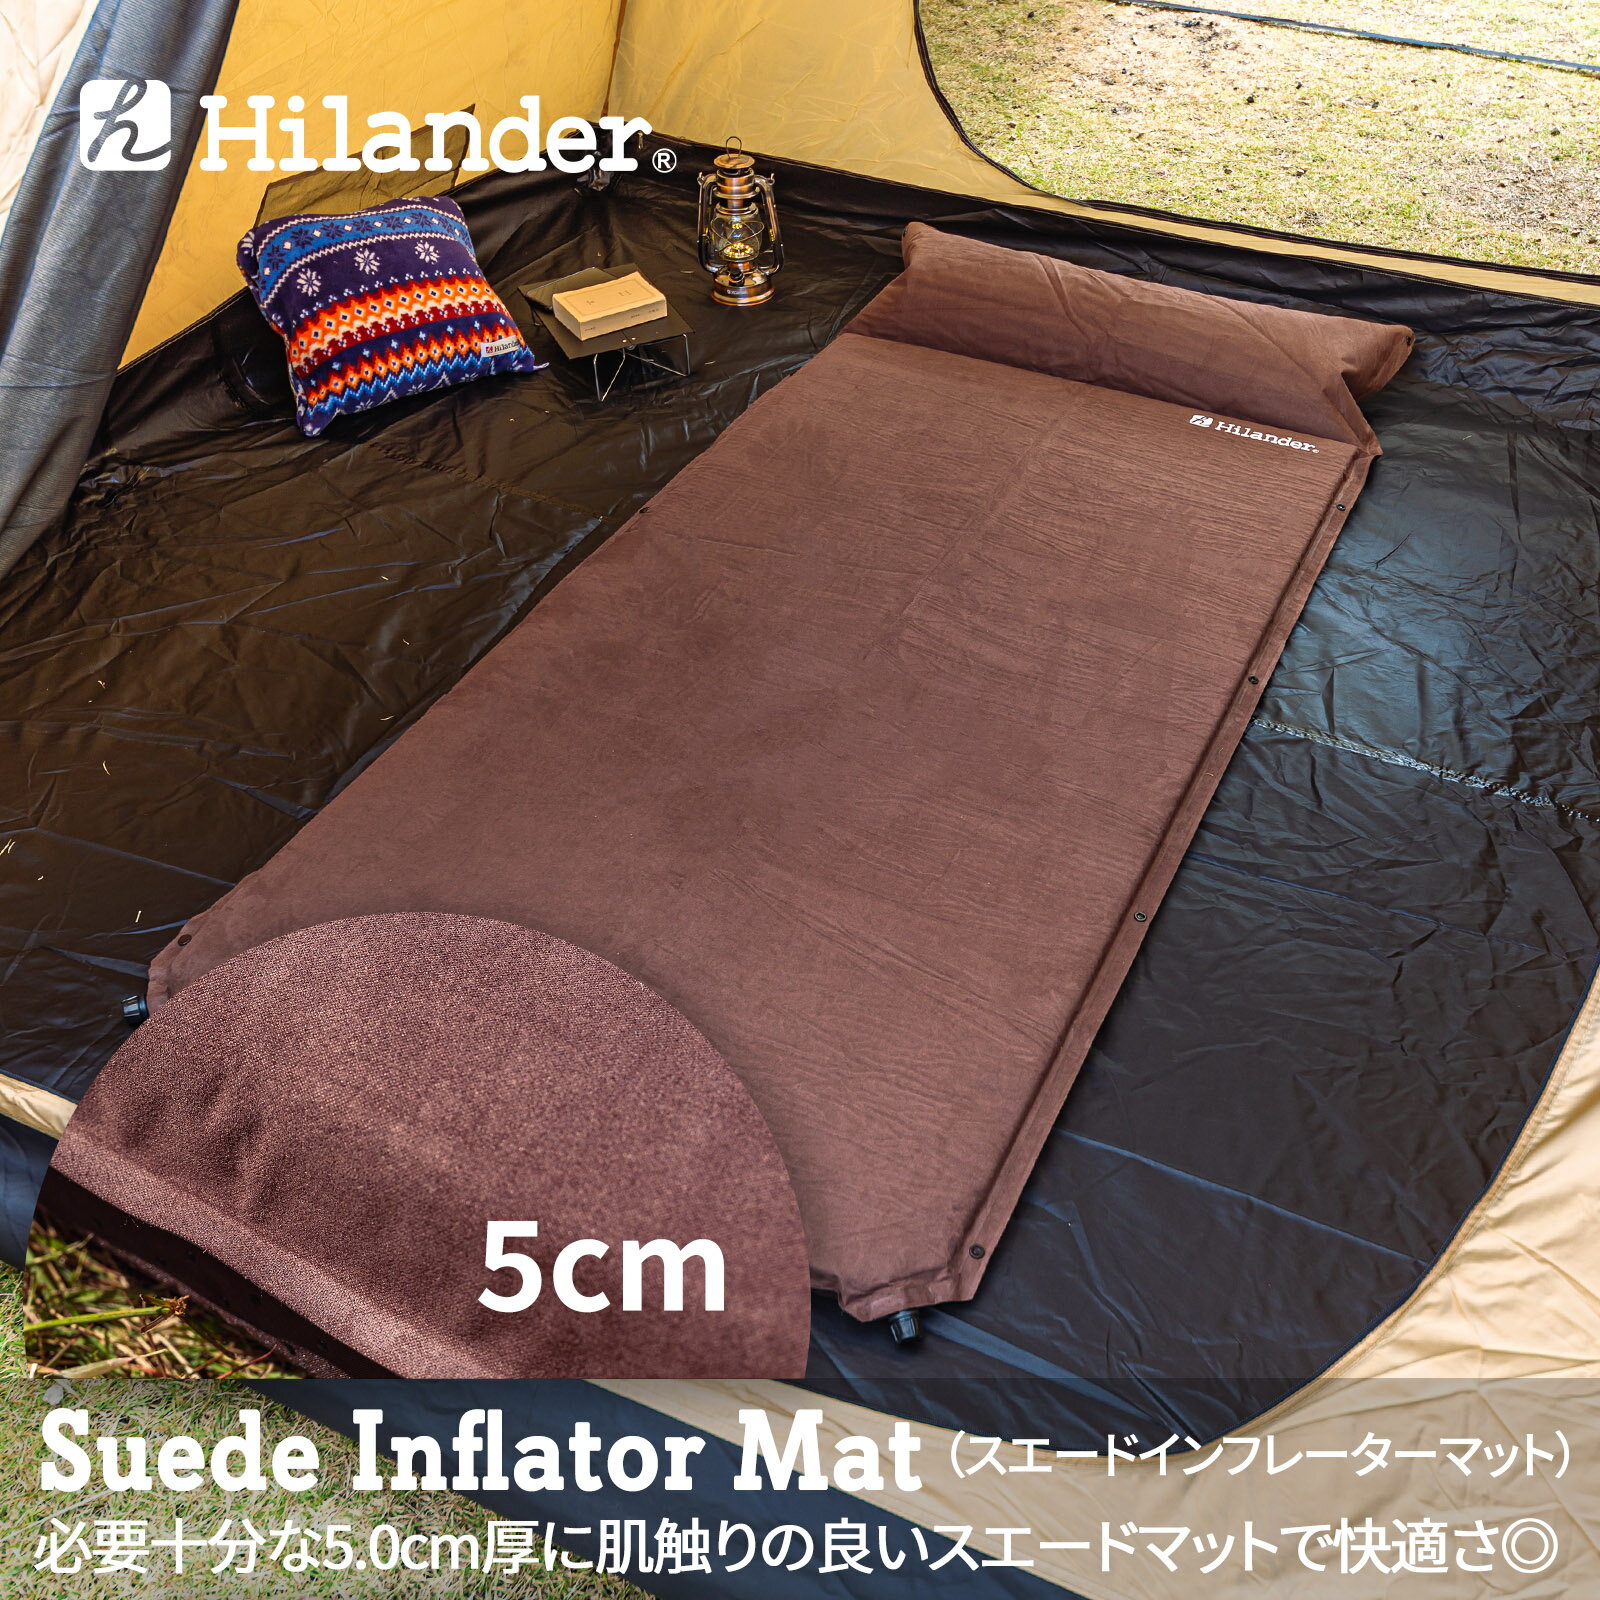 Hilander(ハイランダー) スエードインフレーターマット(枕付きタイプ) 5.0cm 【1年保証】 セミダブル ブラウン UK-11